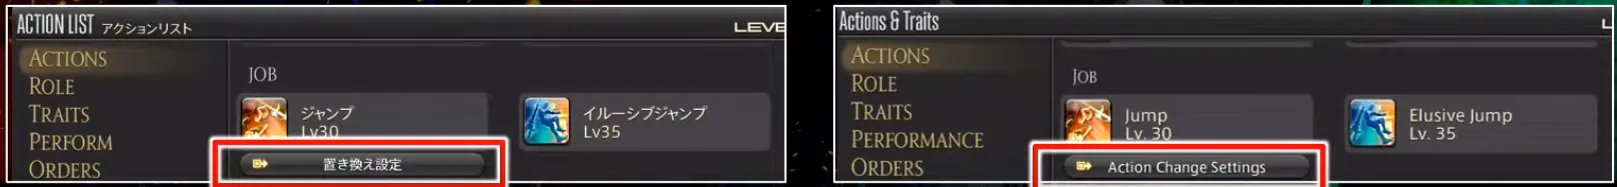 Final Fantasy XIV Action Change Settings